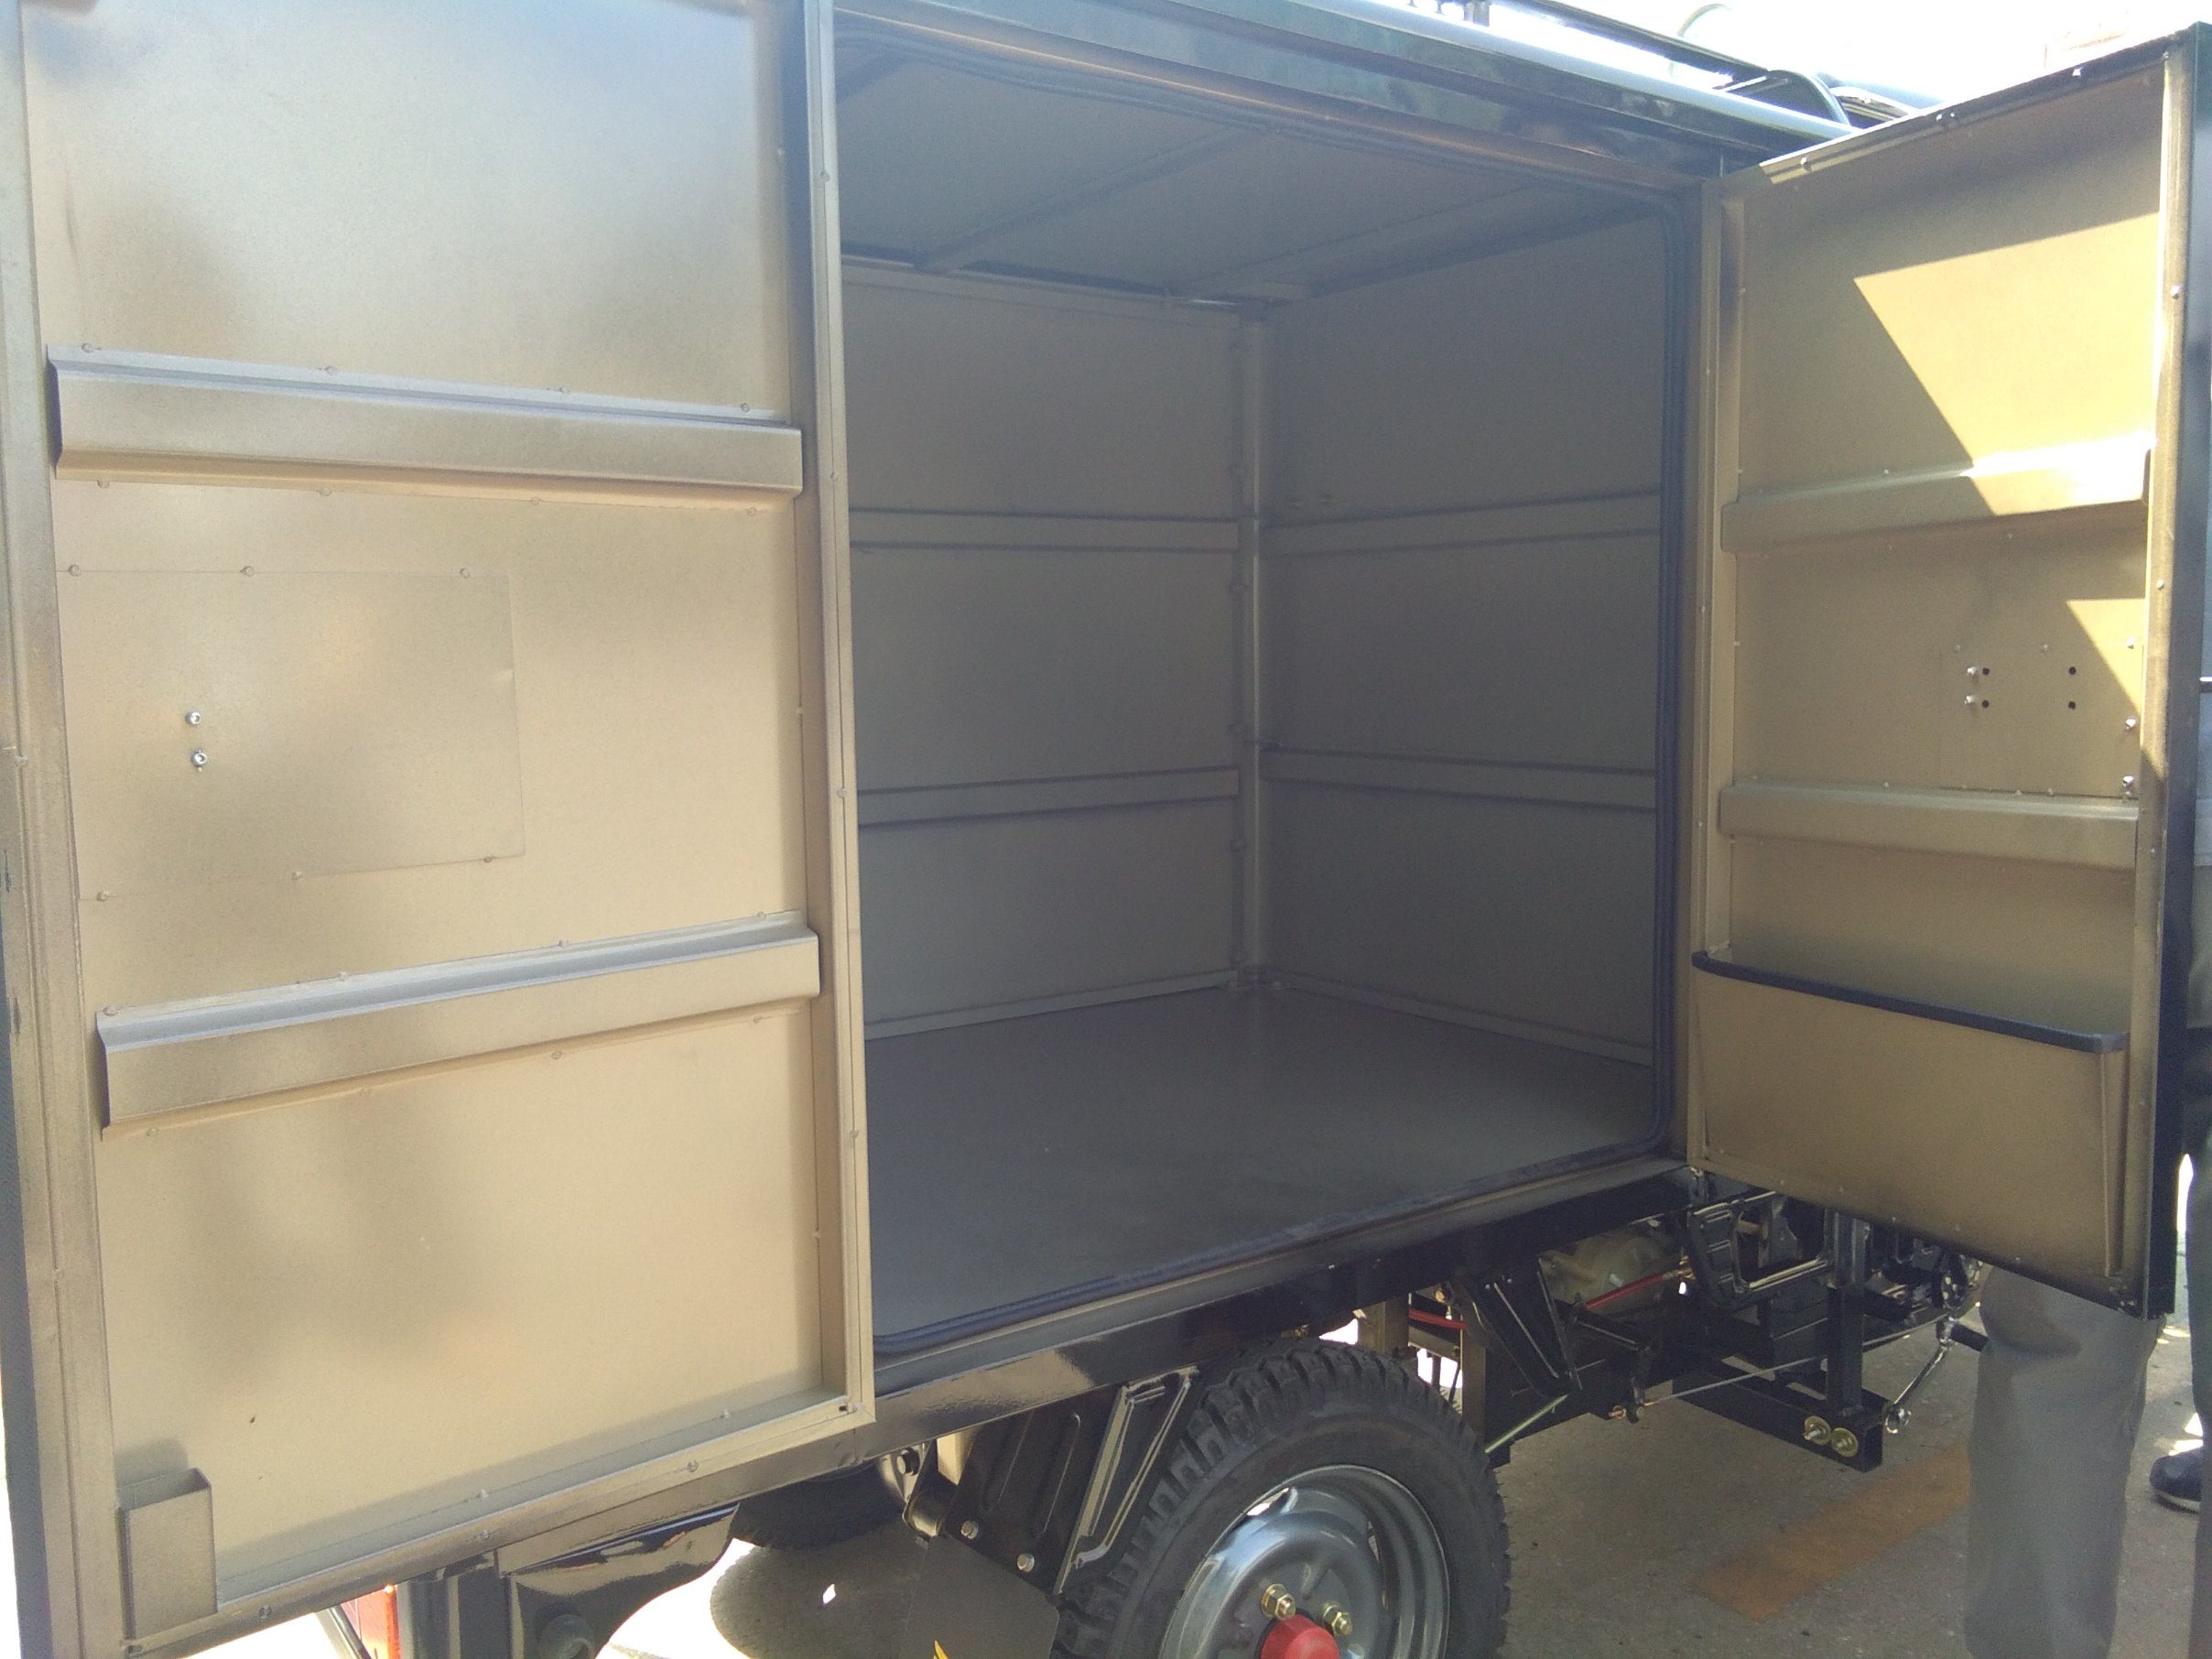 Cargo Motor Three-Wheel Vehicle with Cabin and Kick-Start